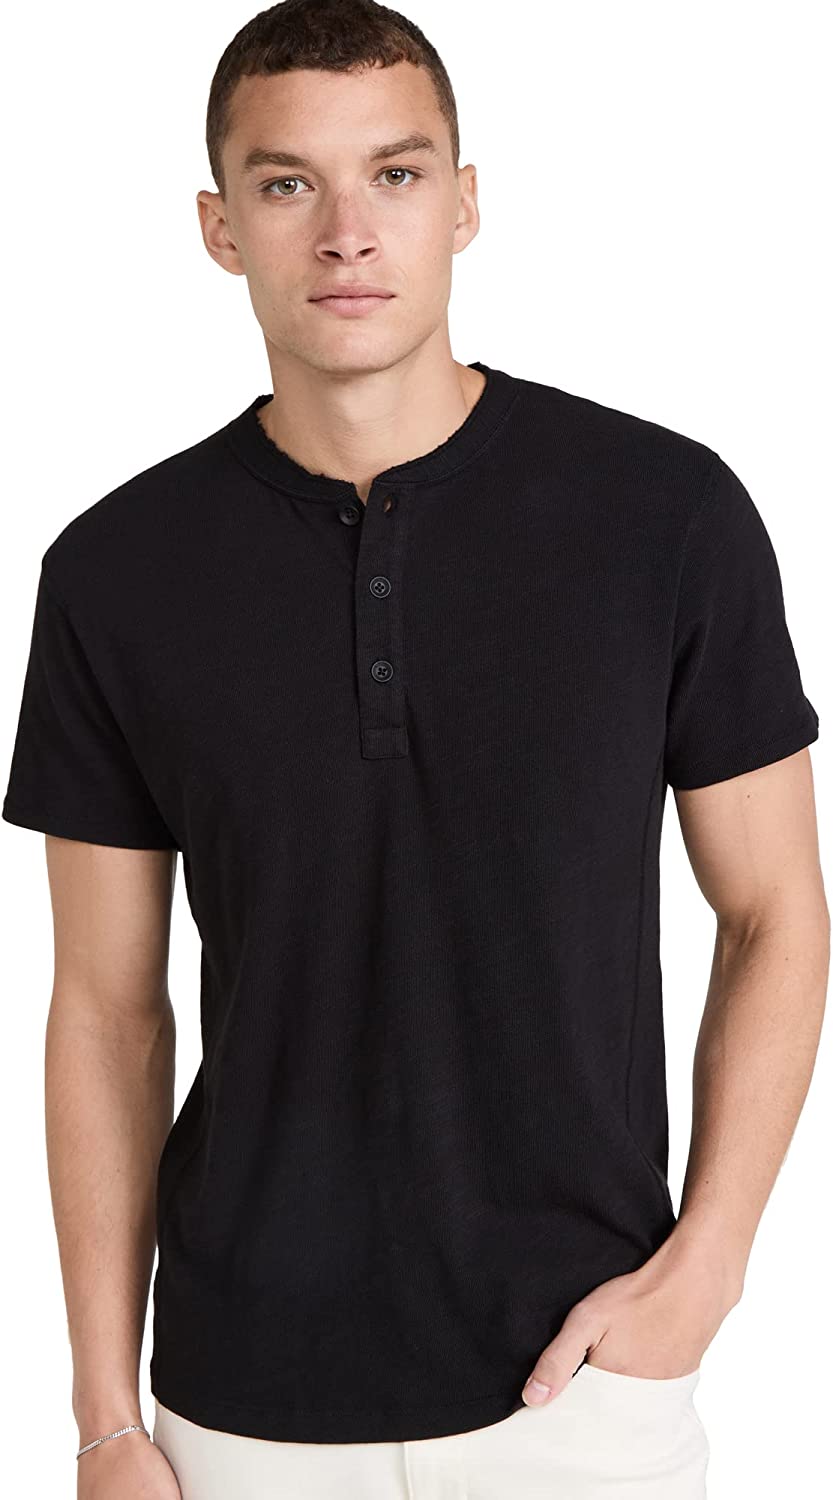 Shop Rag & Bone Men's Classic Henley, Jet Black Short Sleeve Cotton T-shirt